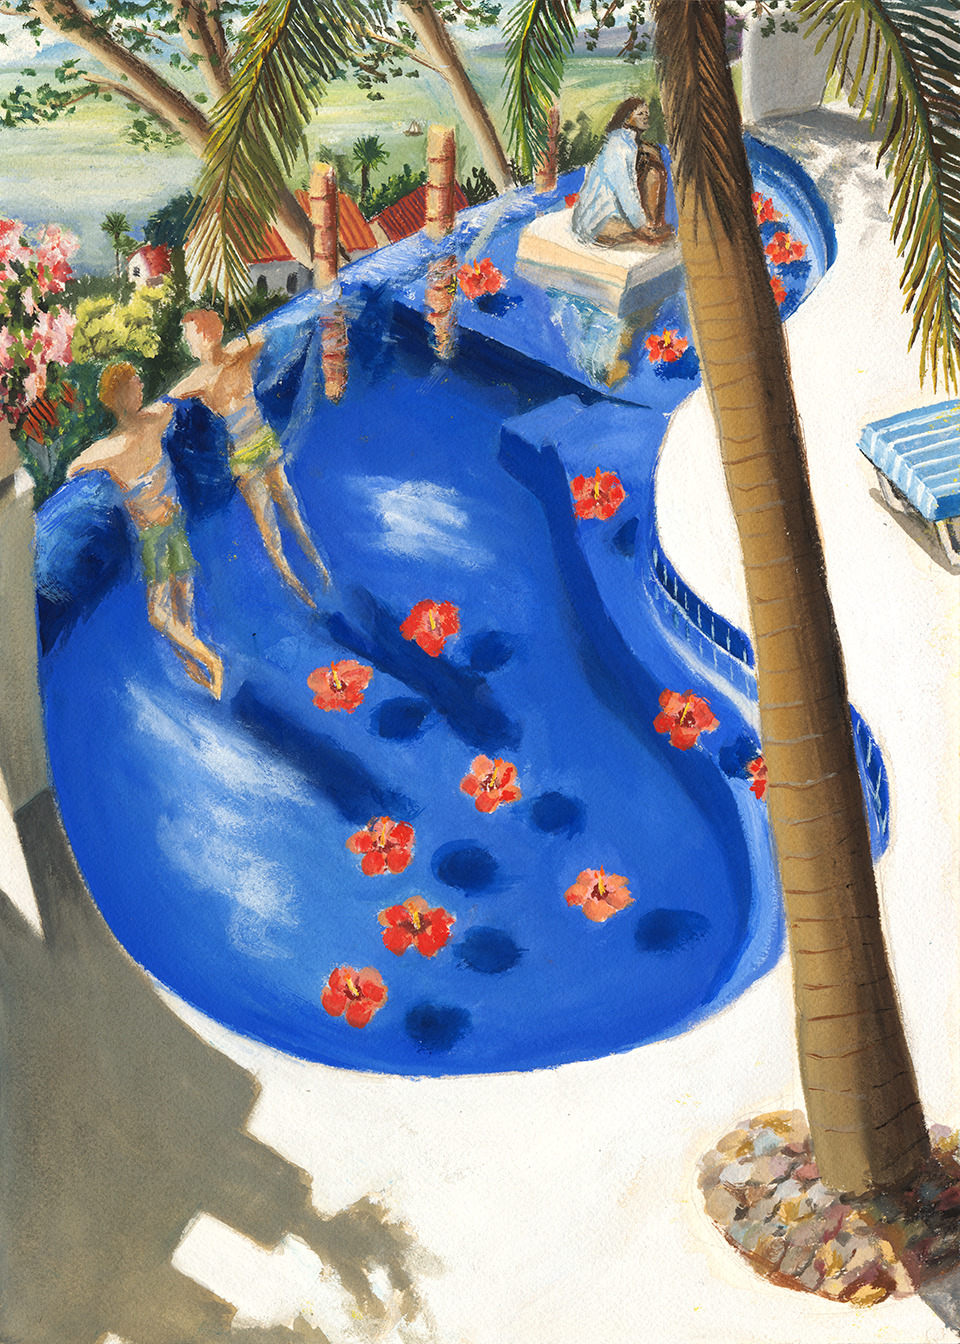 Original Painting: Puerto Vallarta Pool With Boys and Flowers by Daniel Samakow